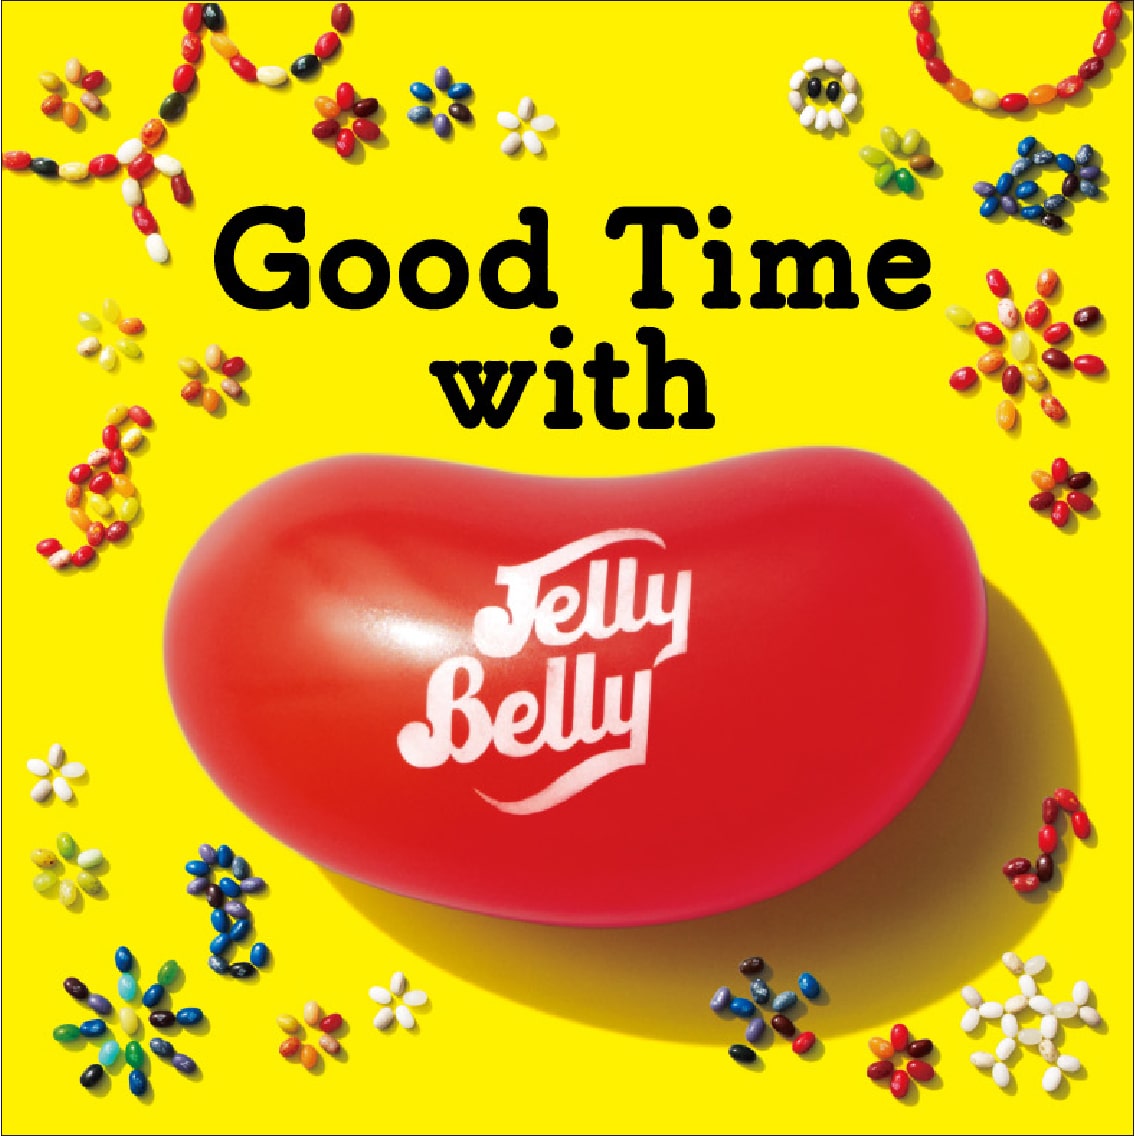 JellyBellyのパンフレット